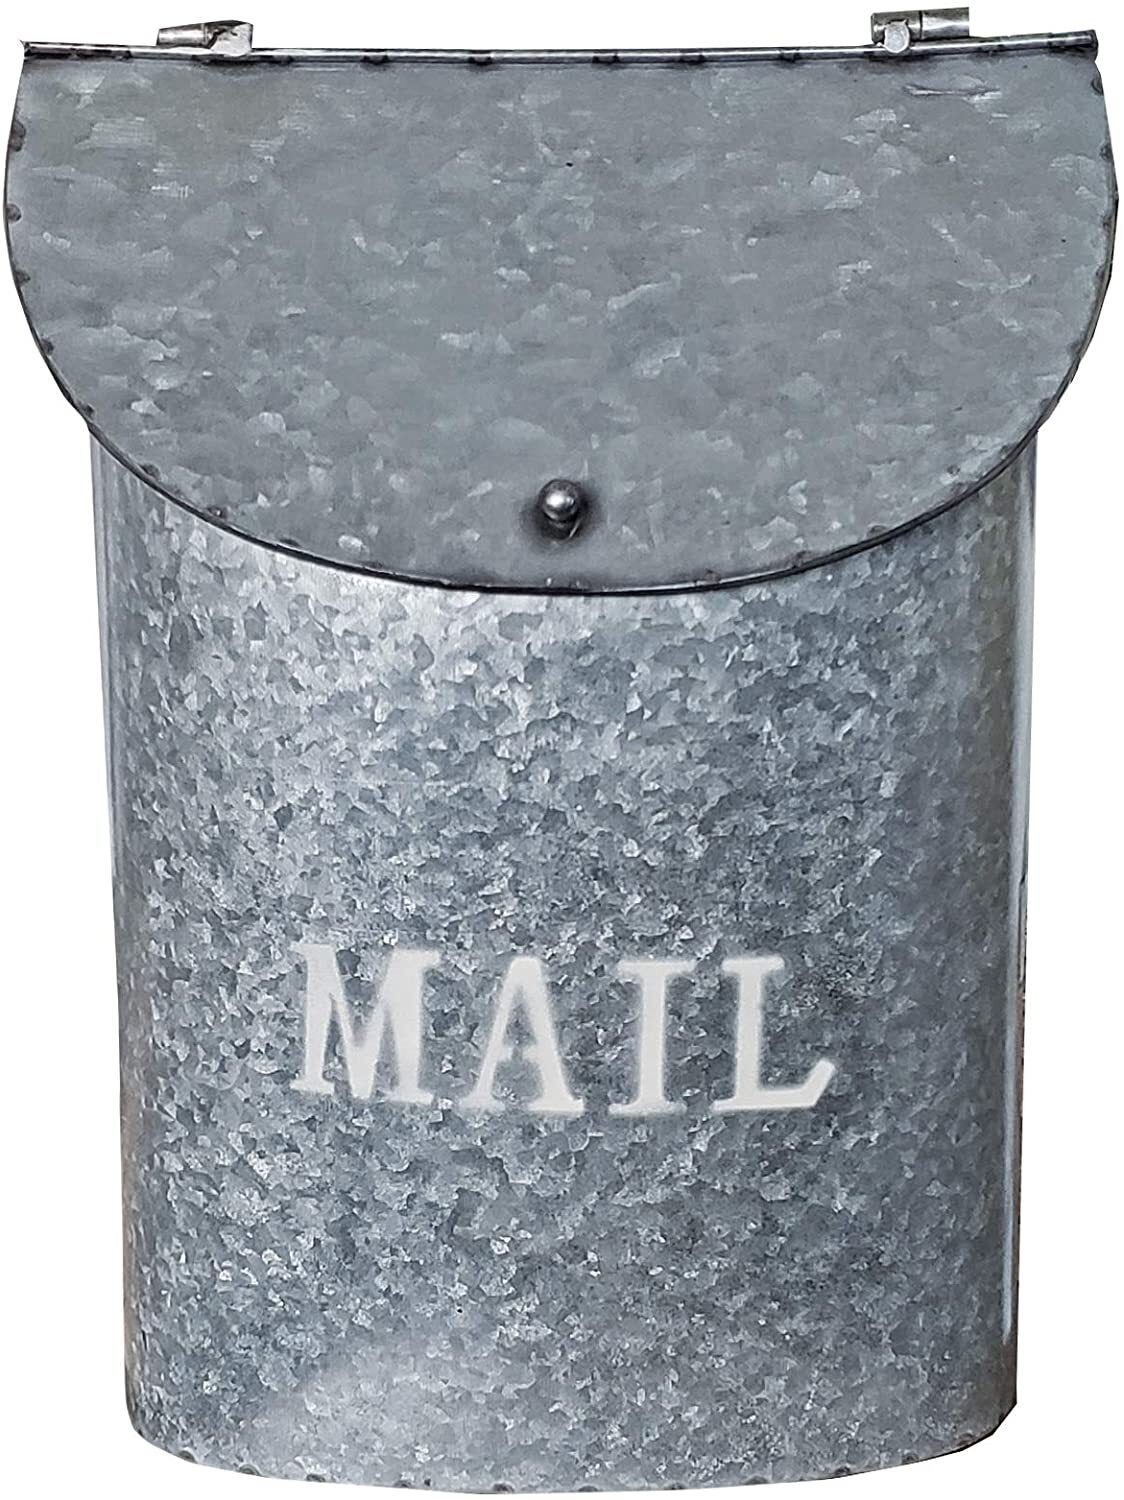 Rothko MAIL Mailbox Rustic, Last Chance